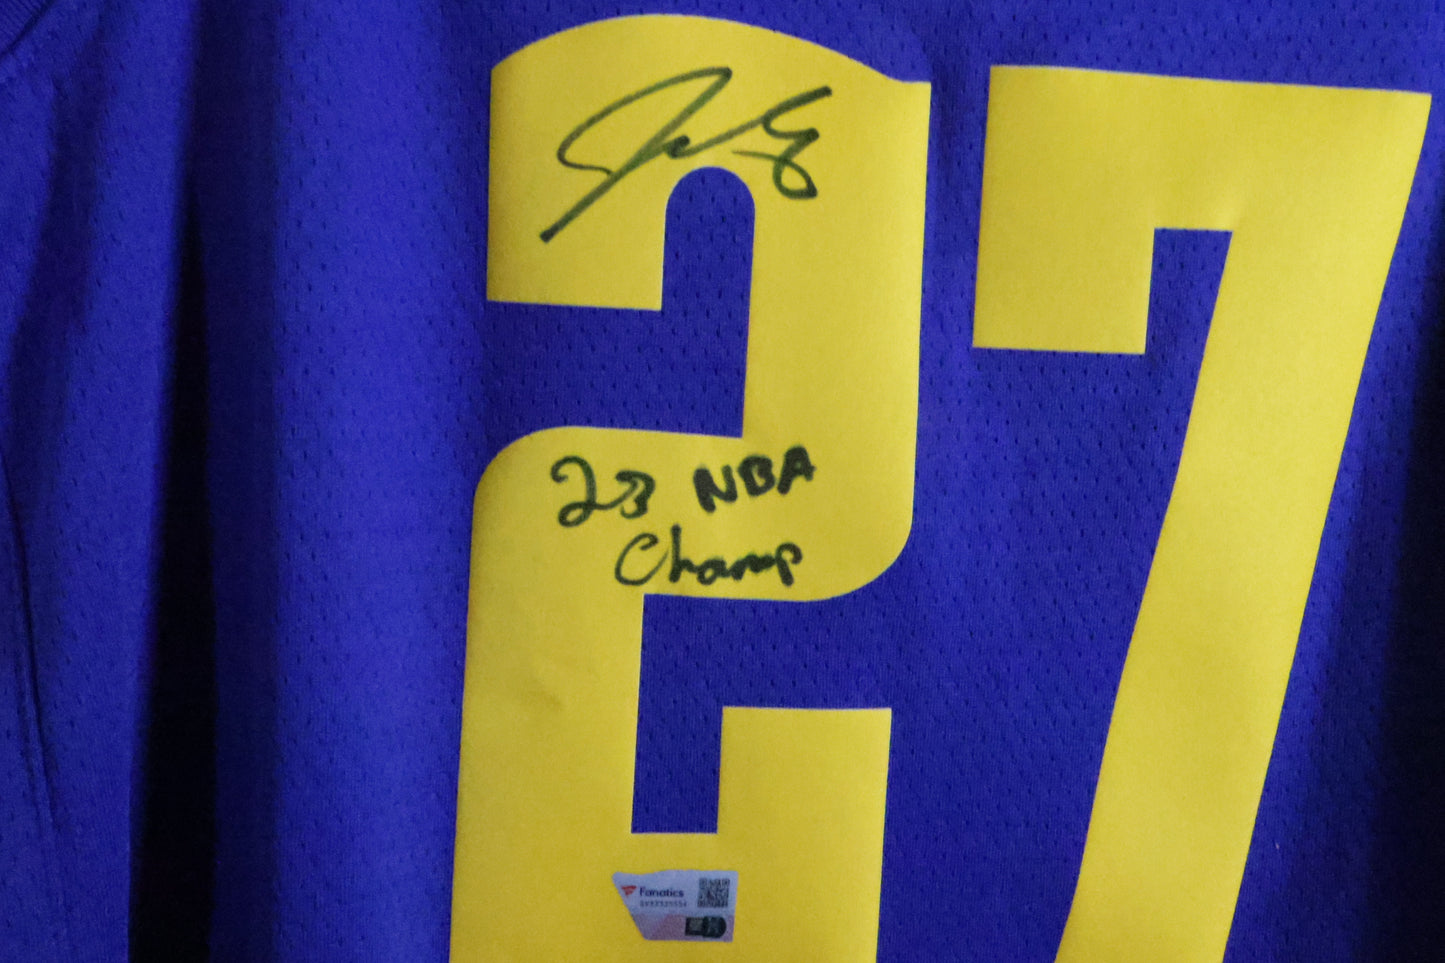 Jamal Murray Denver Nuggets Autographed Jersey - Latitude Sports Marketing